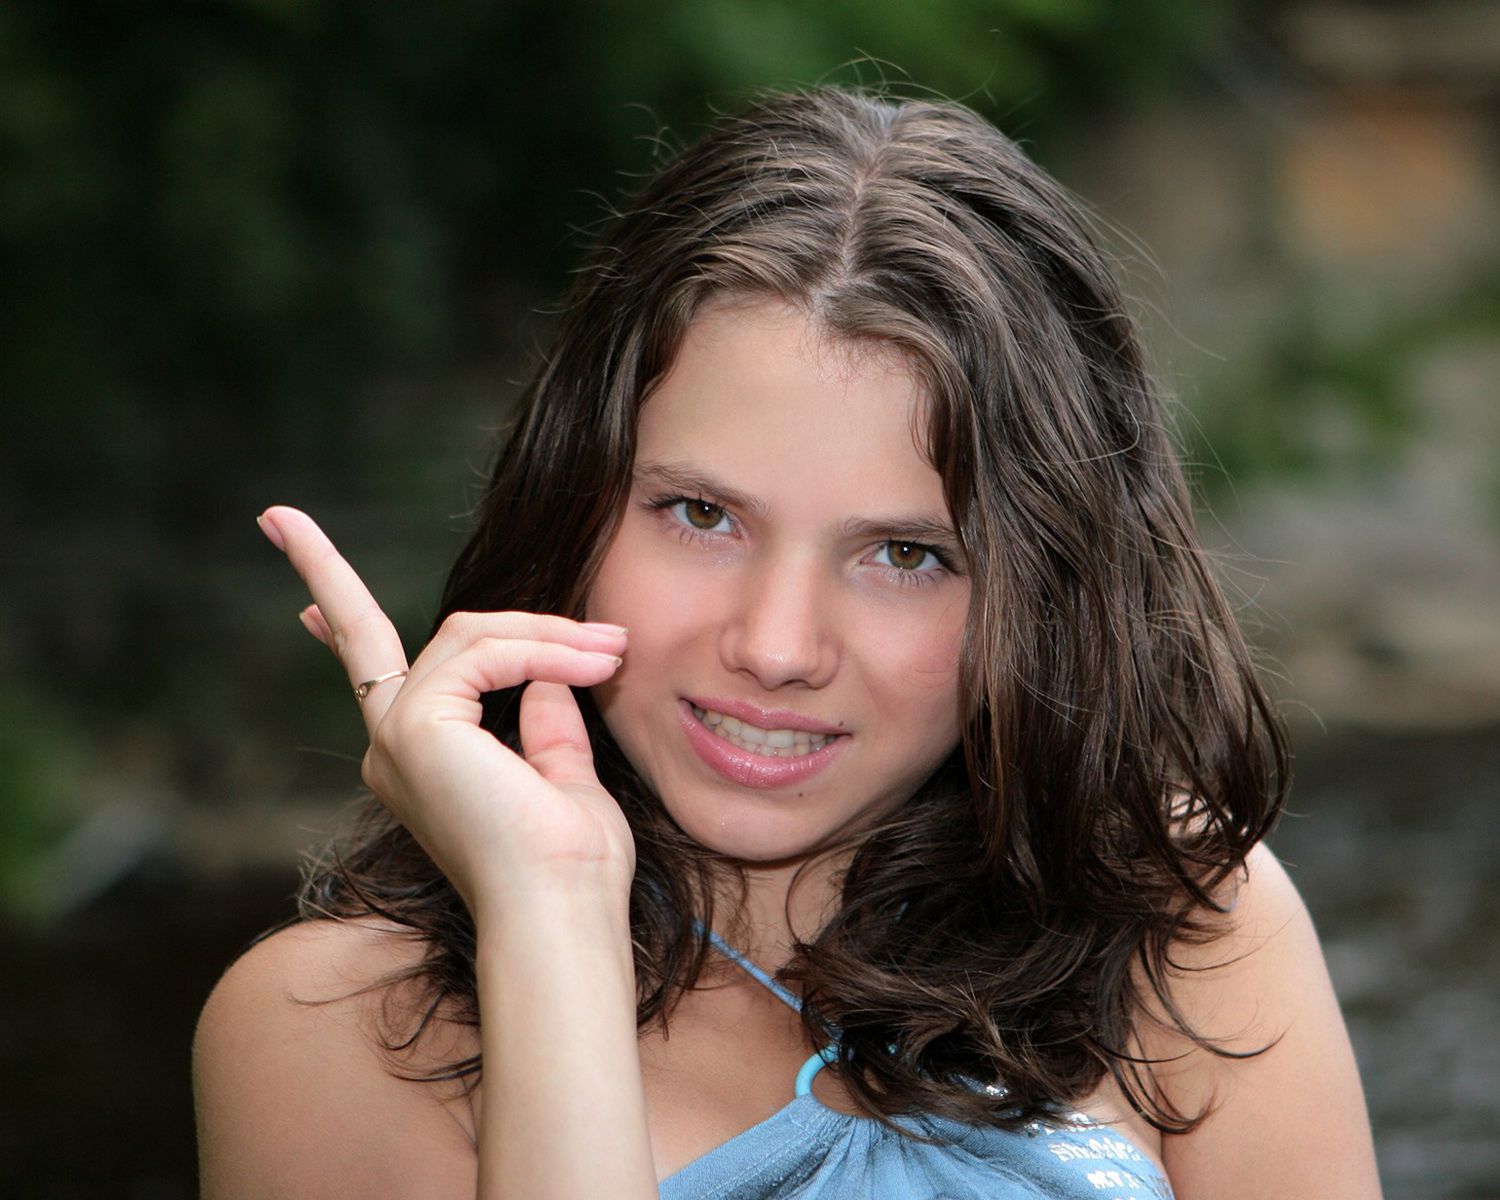 Young sandra orlow teen model